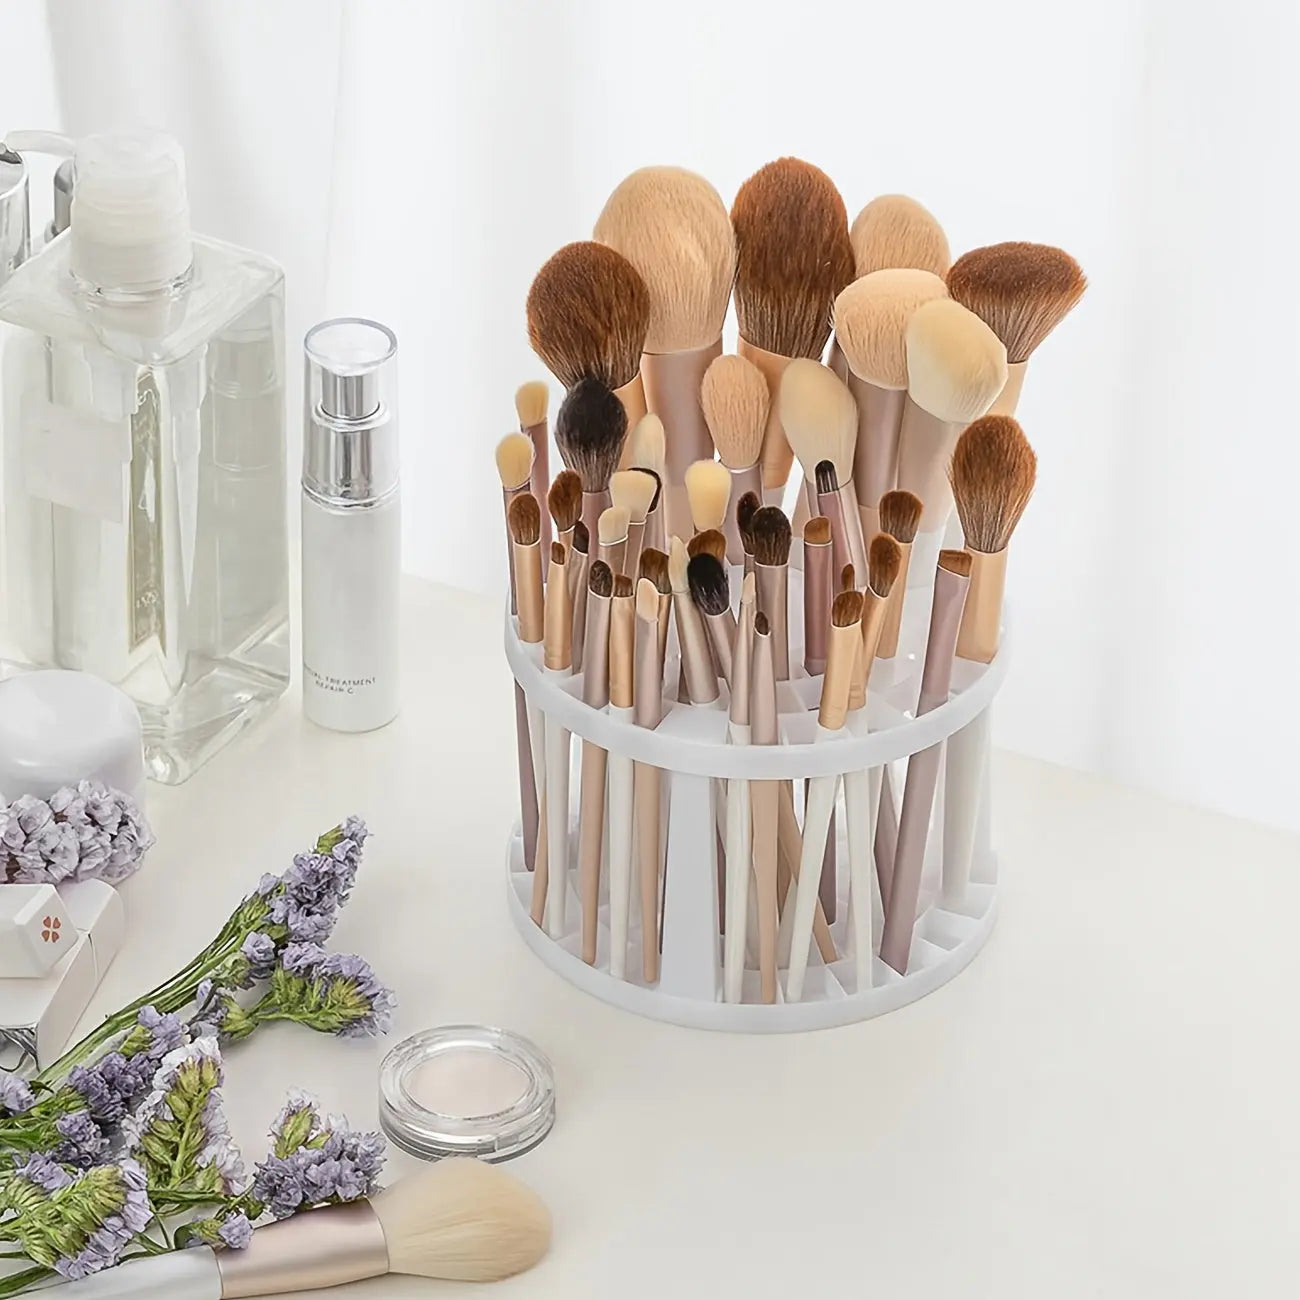 Multifunctional Makeup Organizer and Brush Holder for Bathroom Countertop